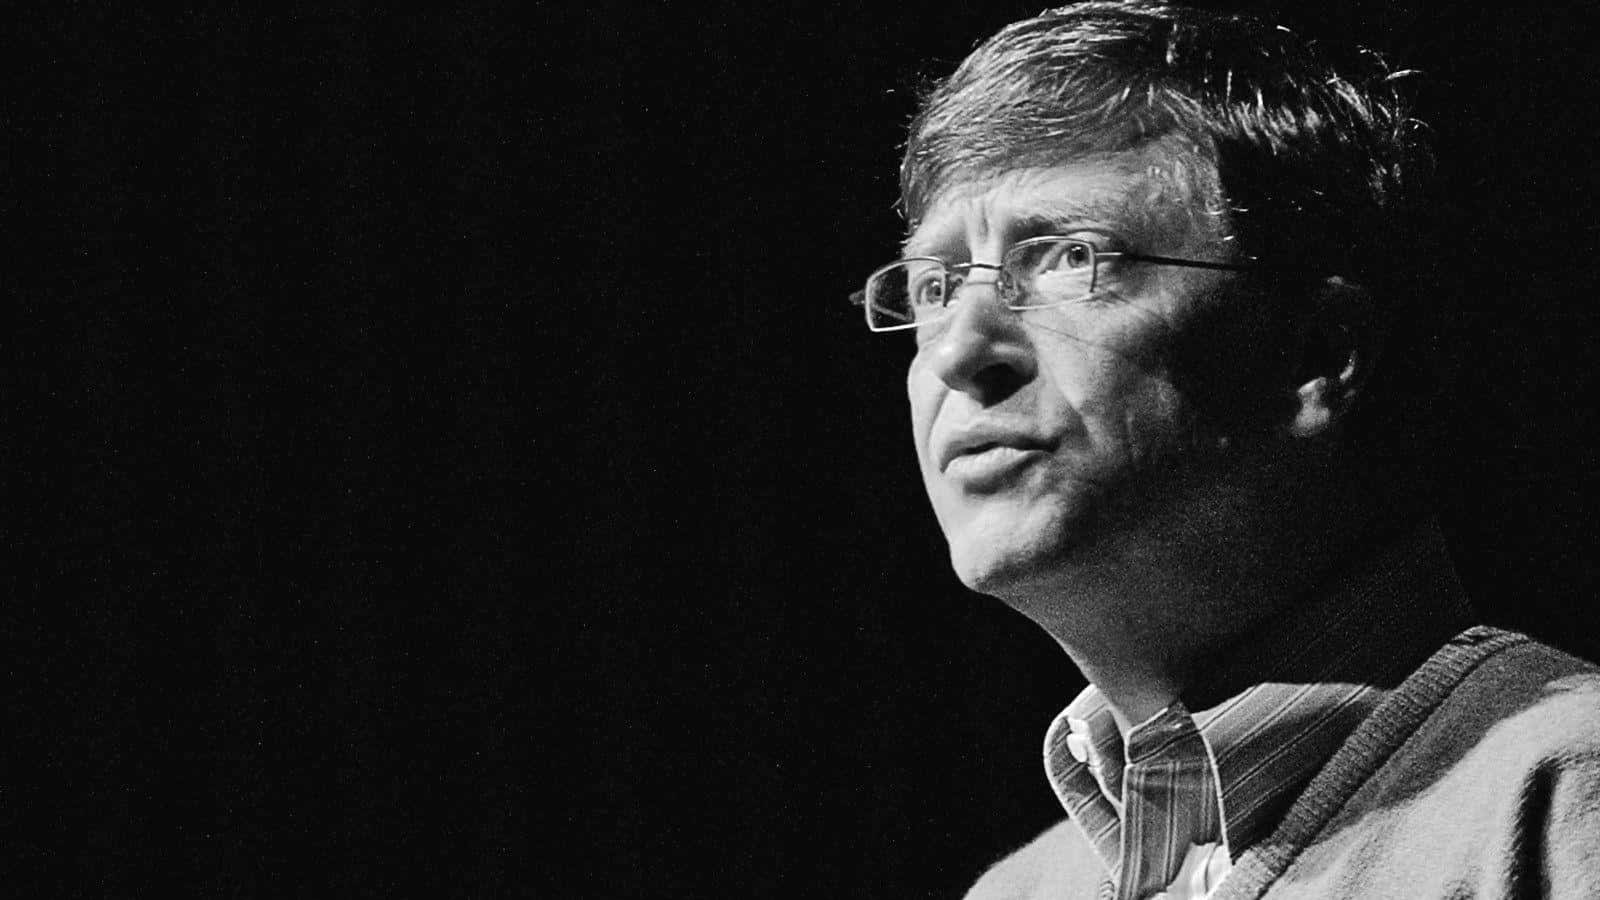 Bill Gates, Microsoft co-founder and philanthropist